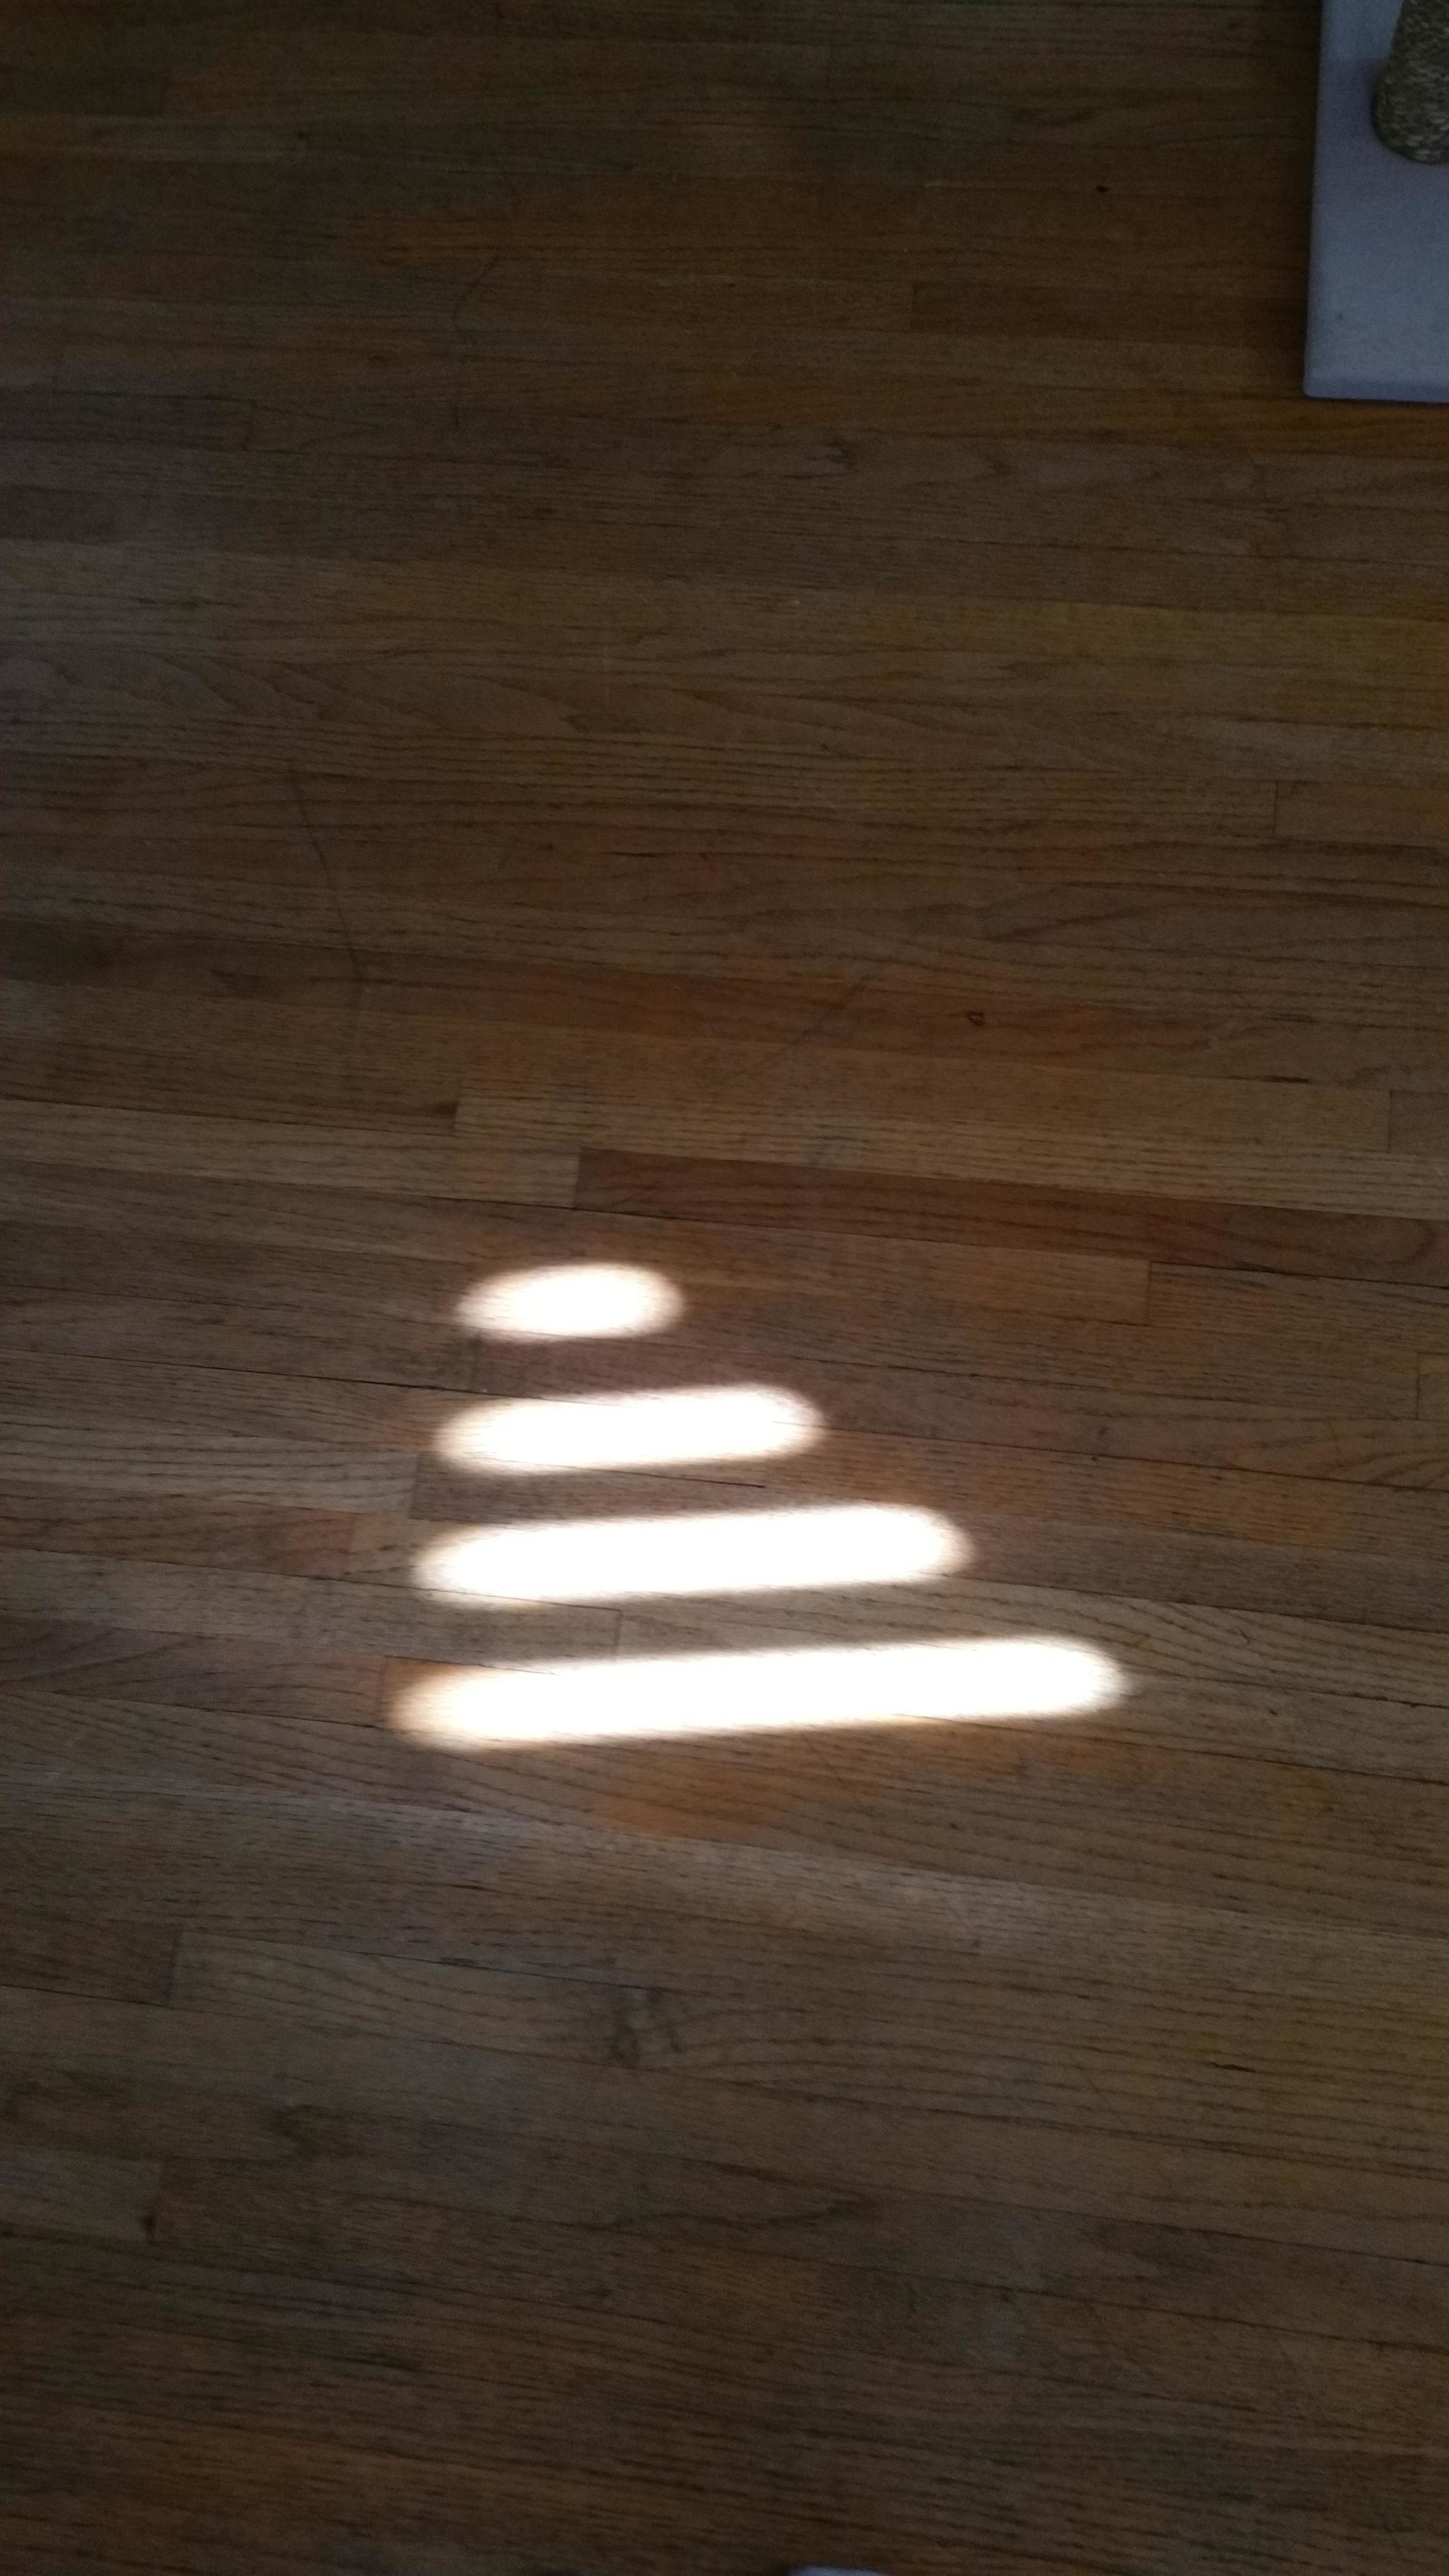 The sun coming through the window looks like a giant wifi signal.